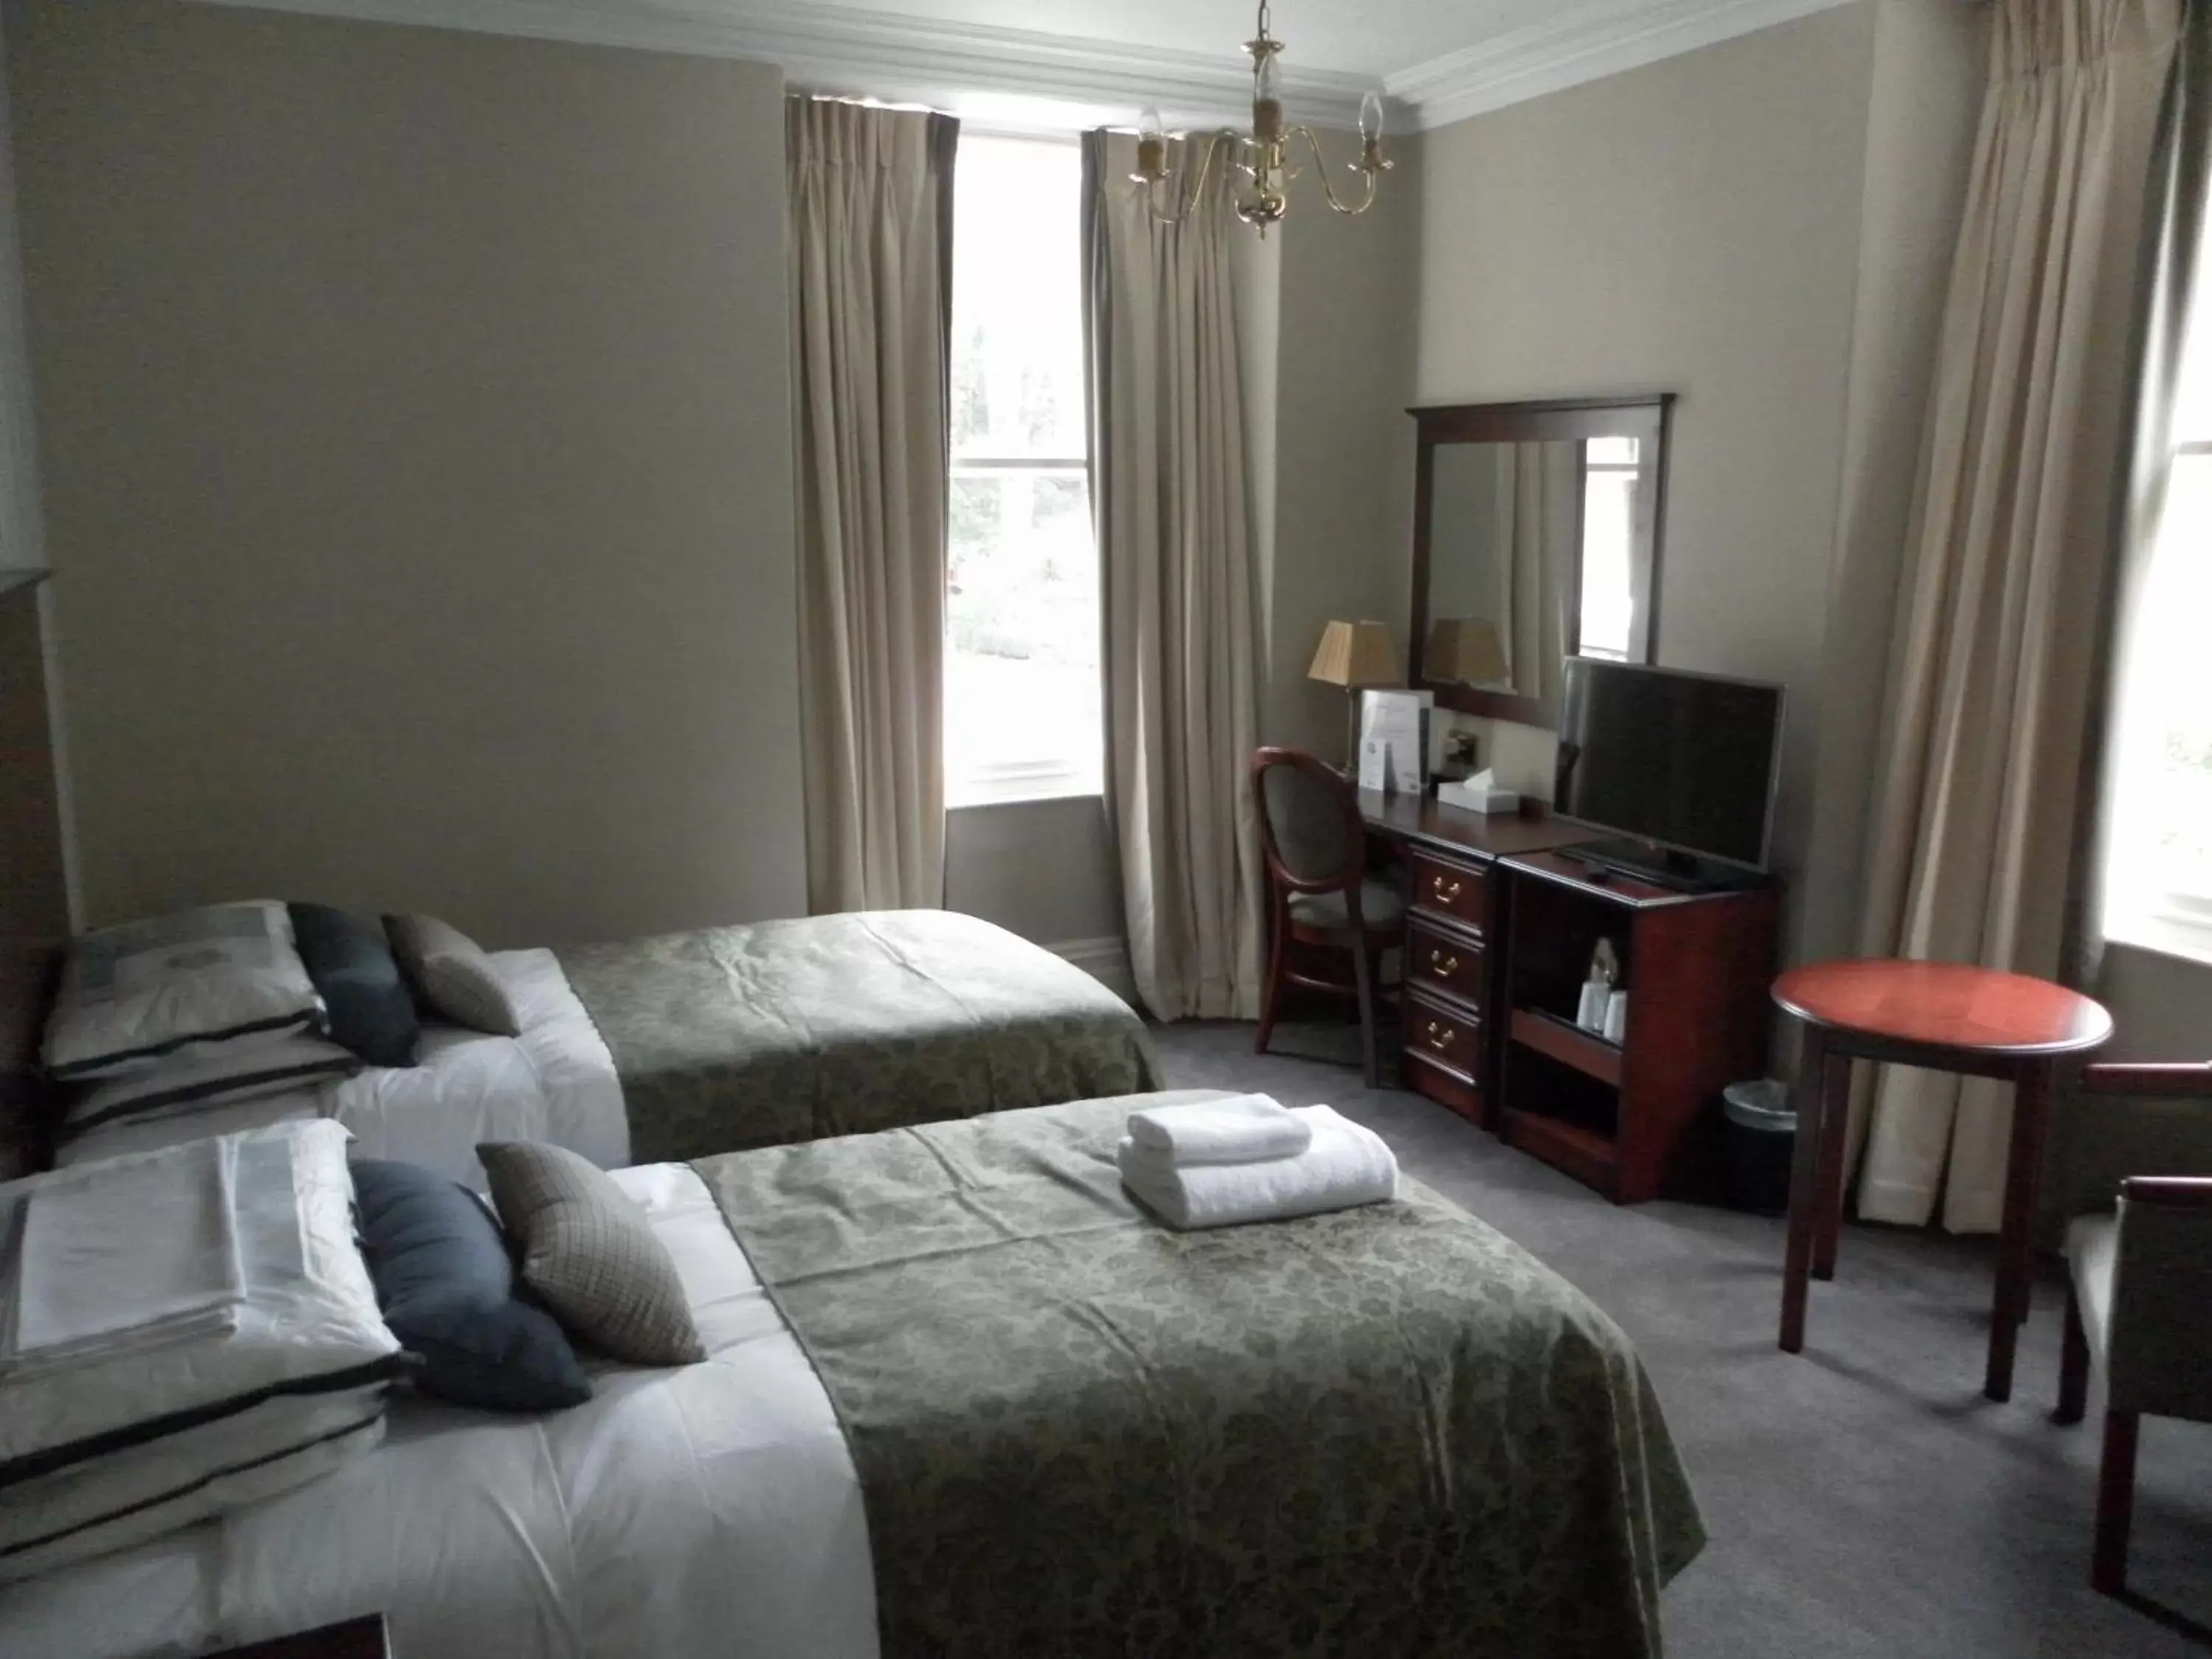 Bed, Room Photo in Cumbria Grand Hotel